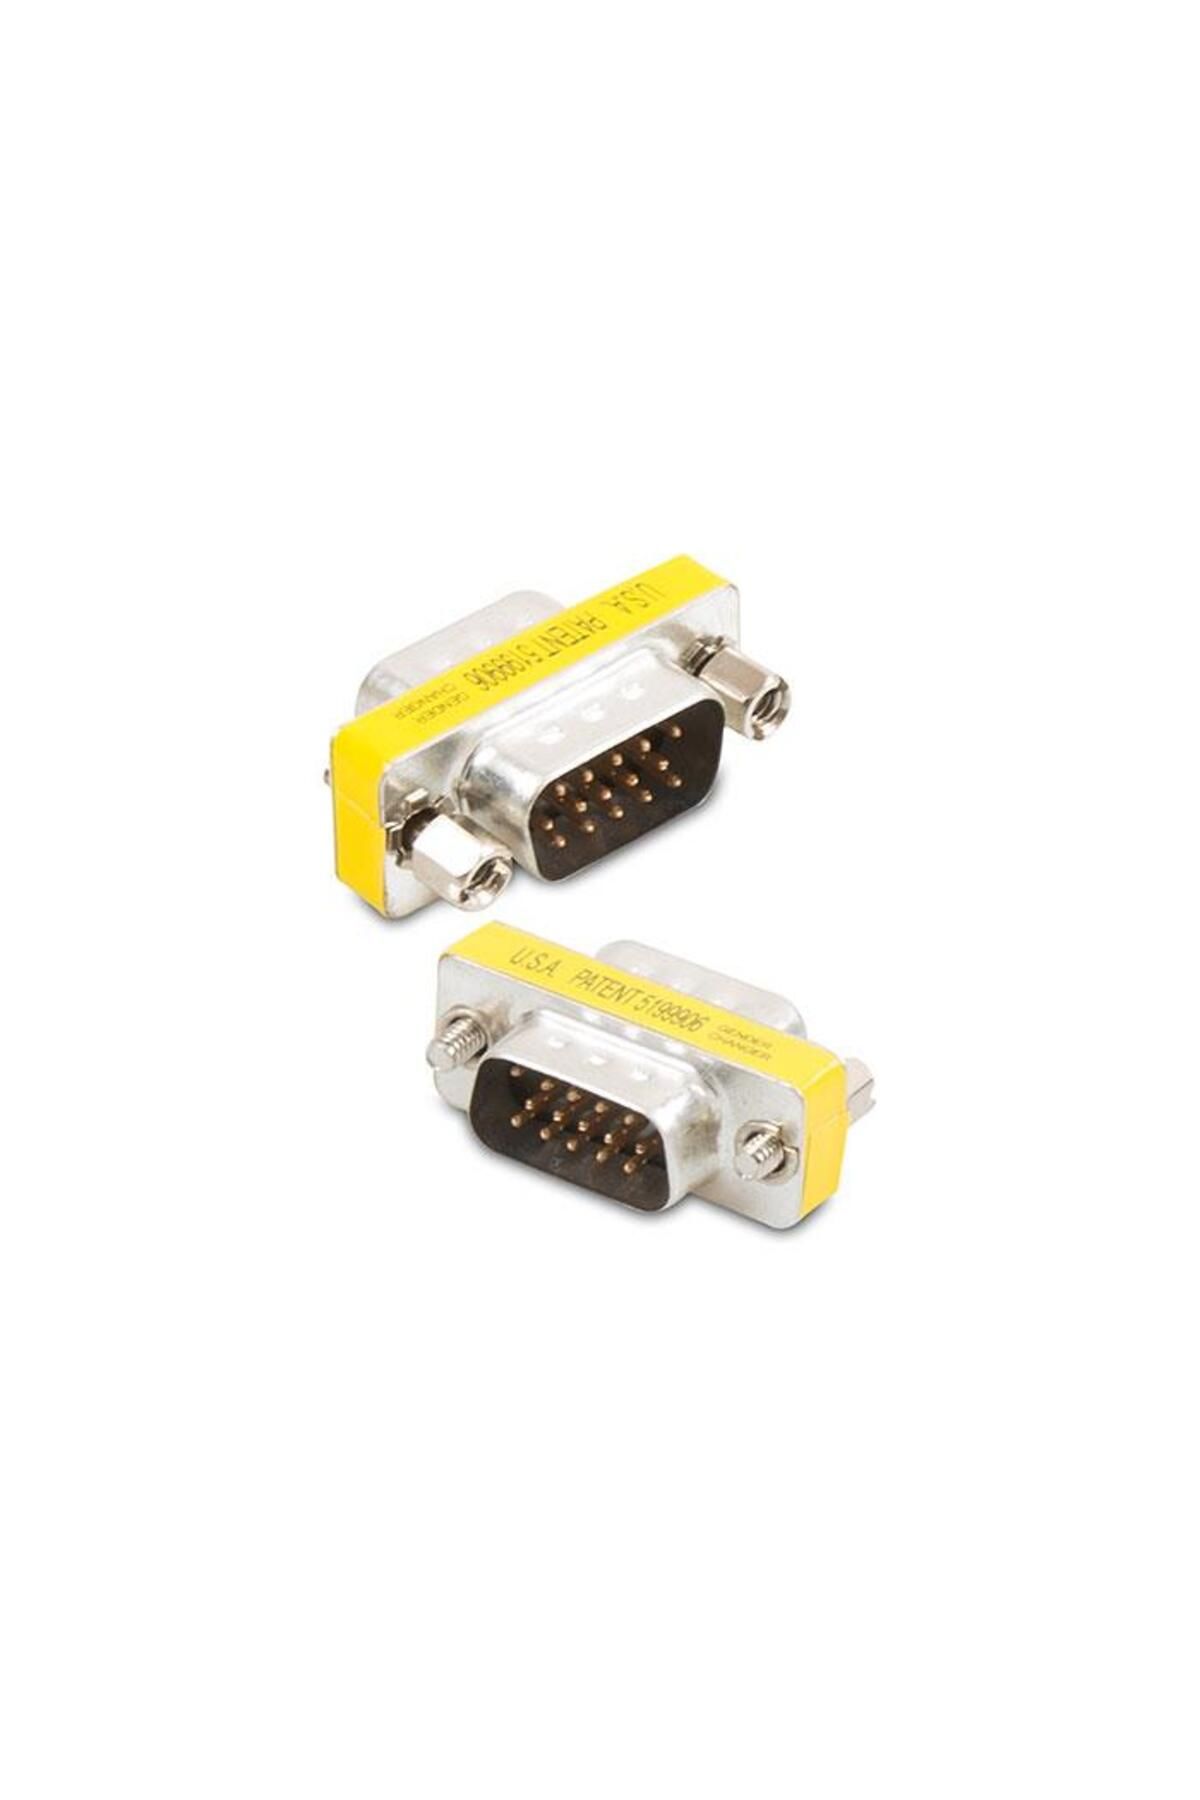 S-Link Vga Erkek - Erkek 15 pin Dönüştürücü 15 Pin Vga Çevirici M/M